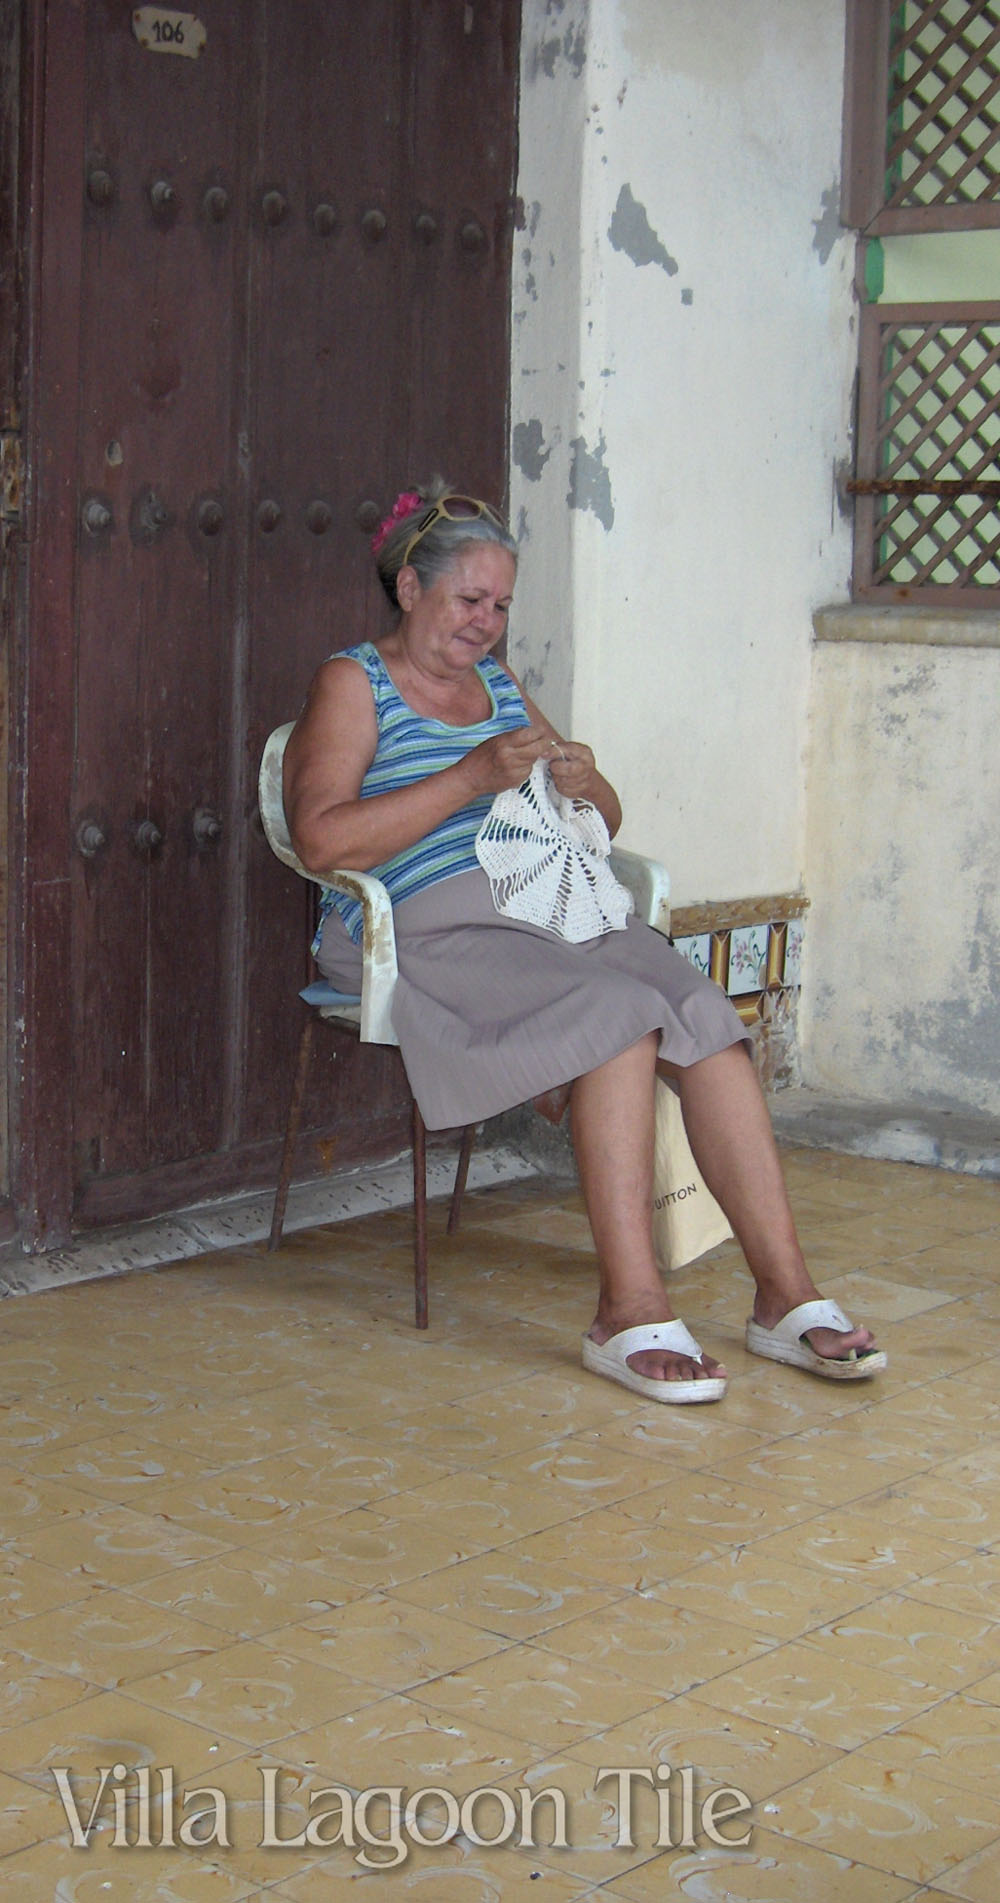 An older Cuban lady crocheting on a cement tile veranda.